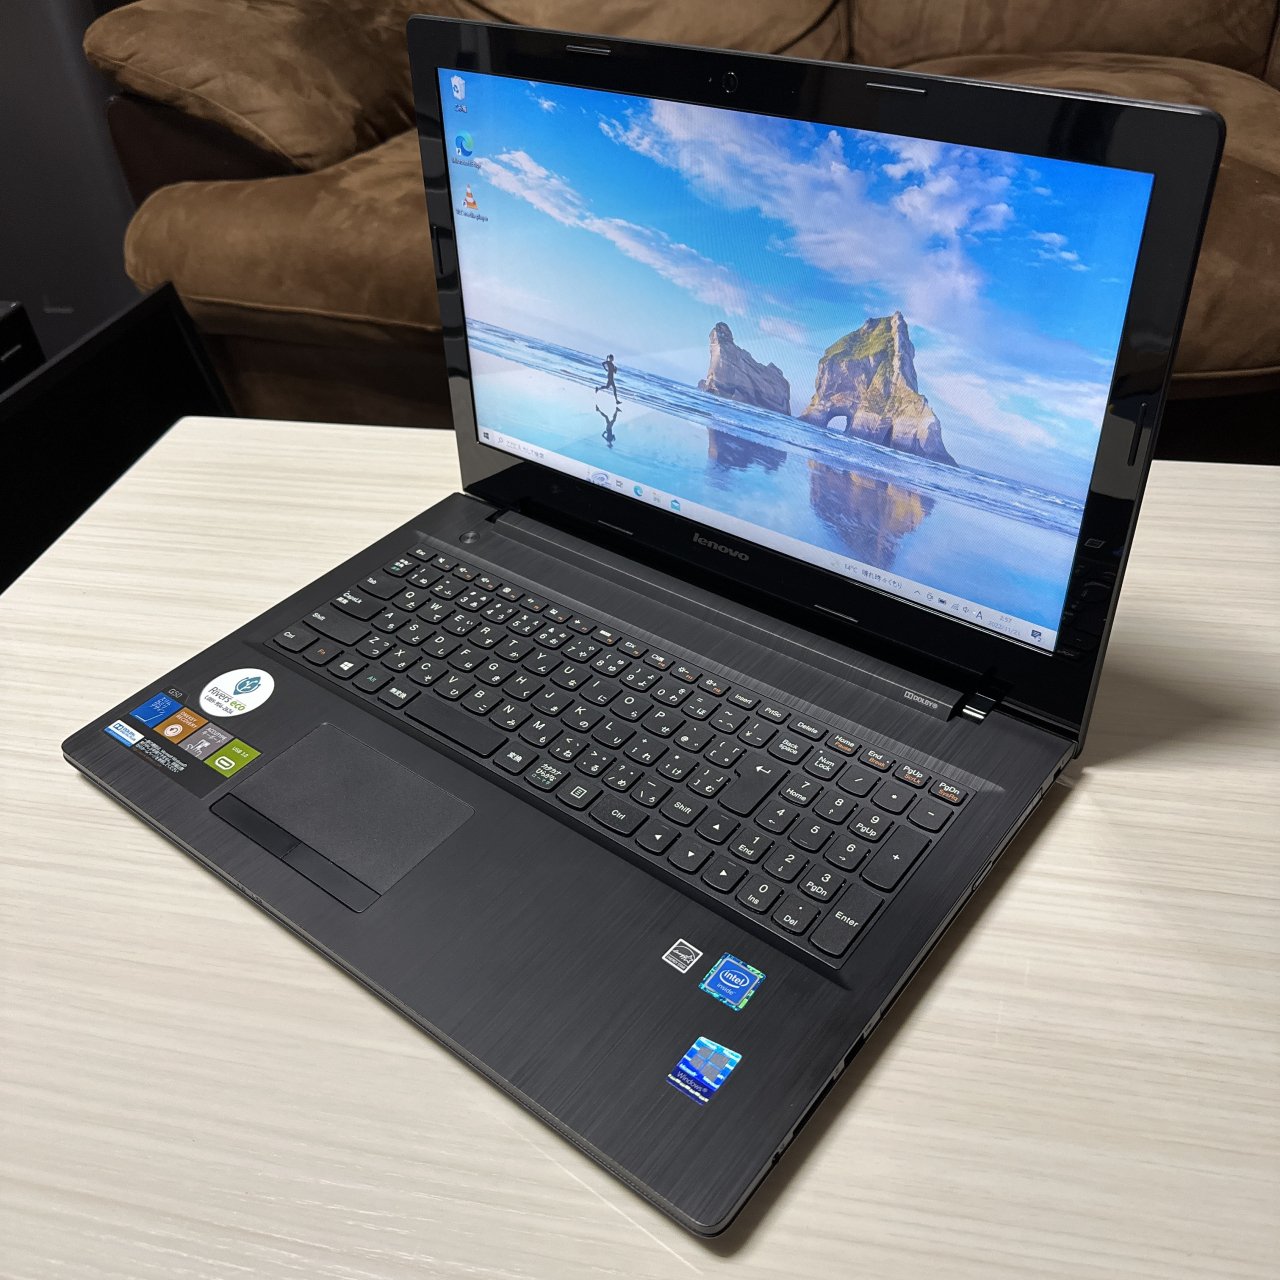 Lenovo ノートパソコン B41-30 Office2019 SSD